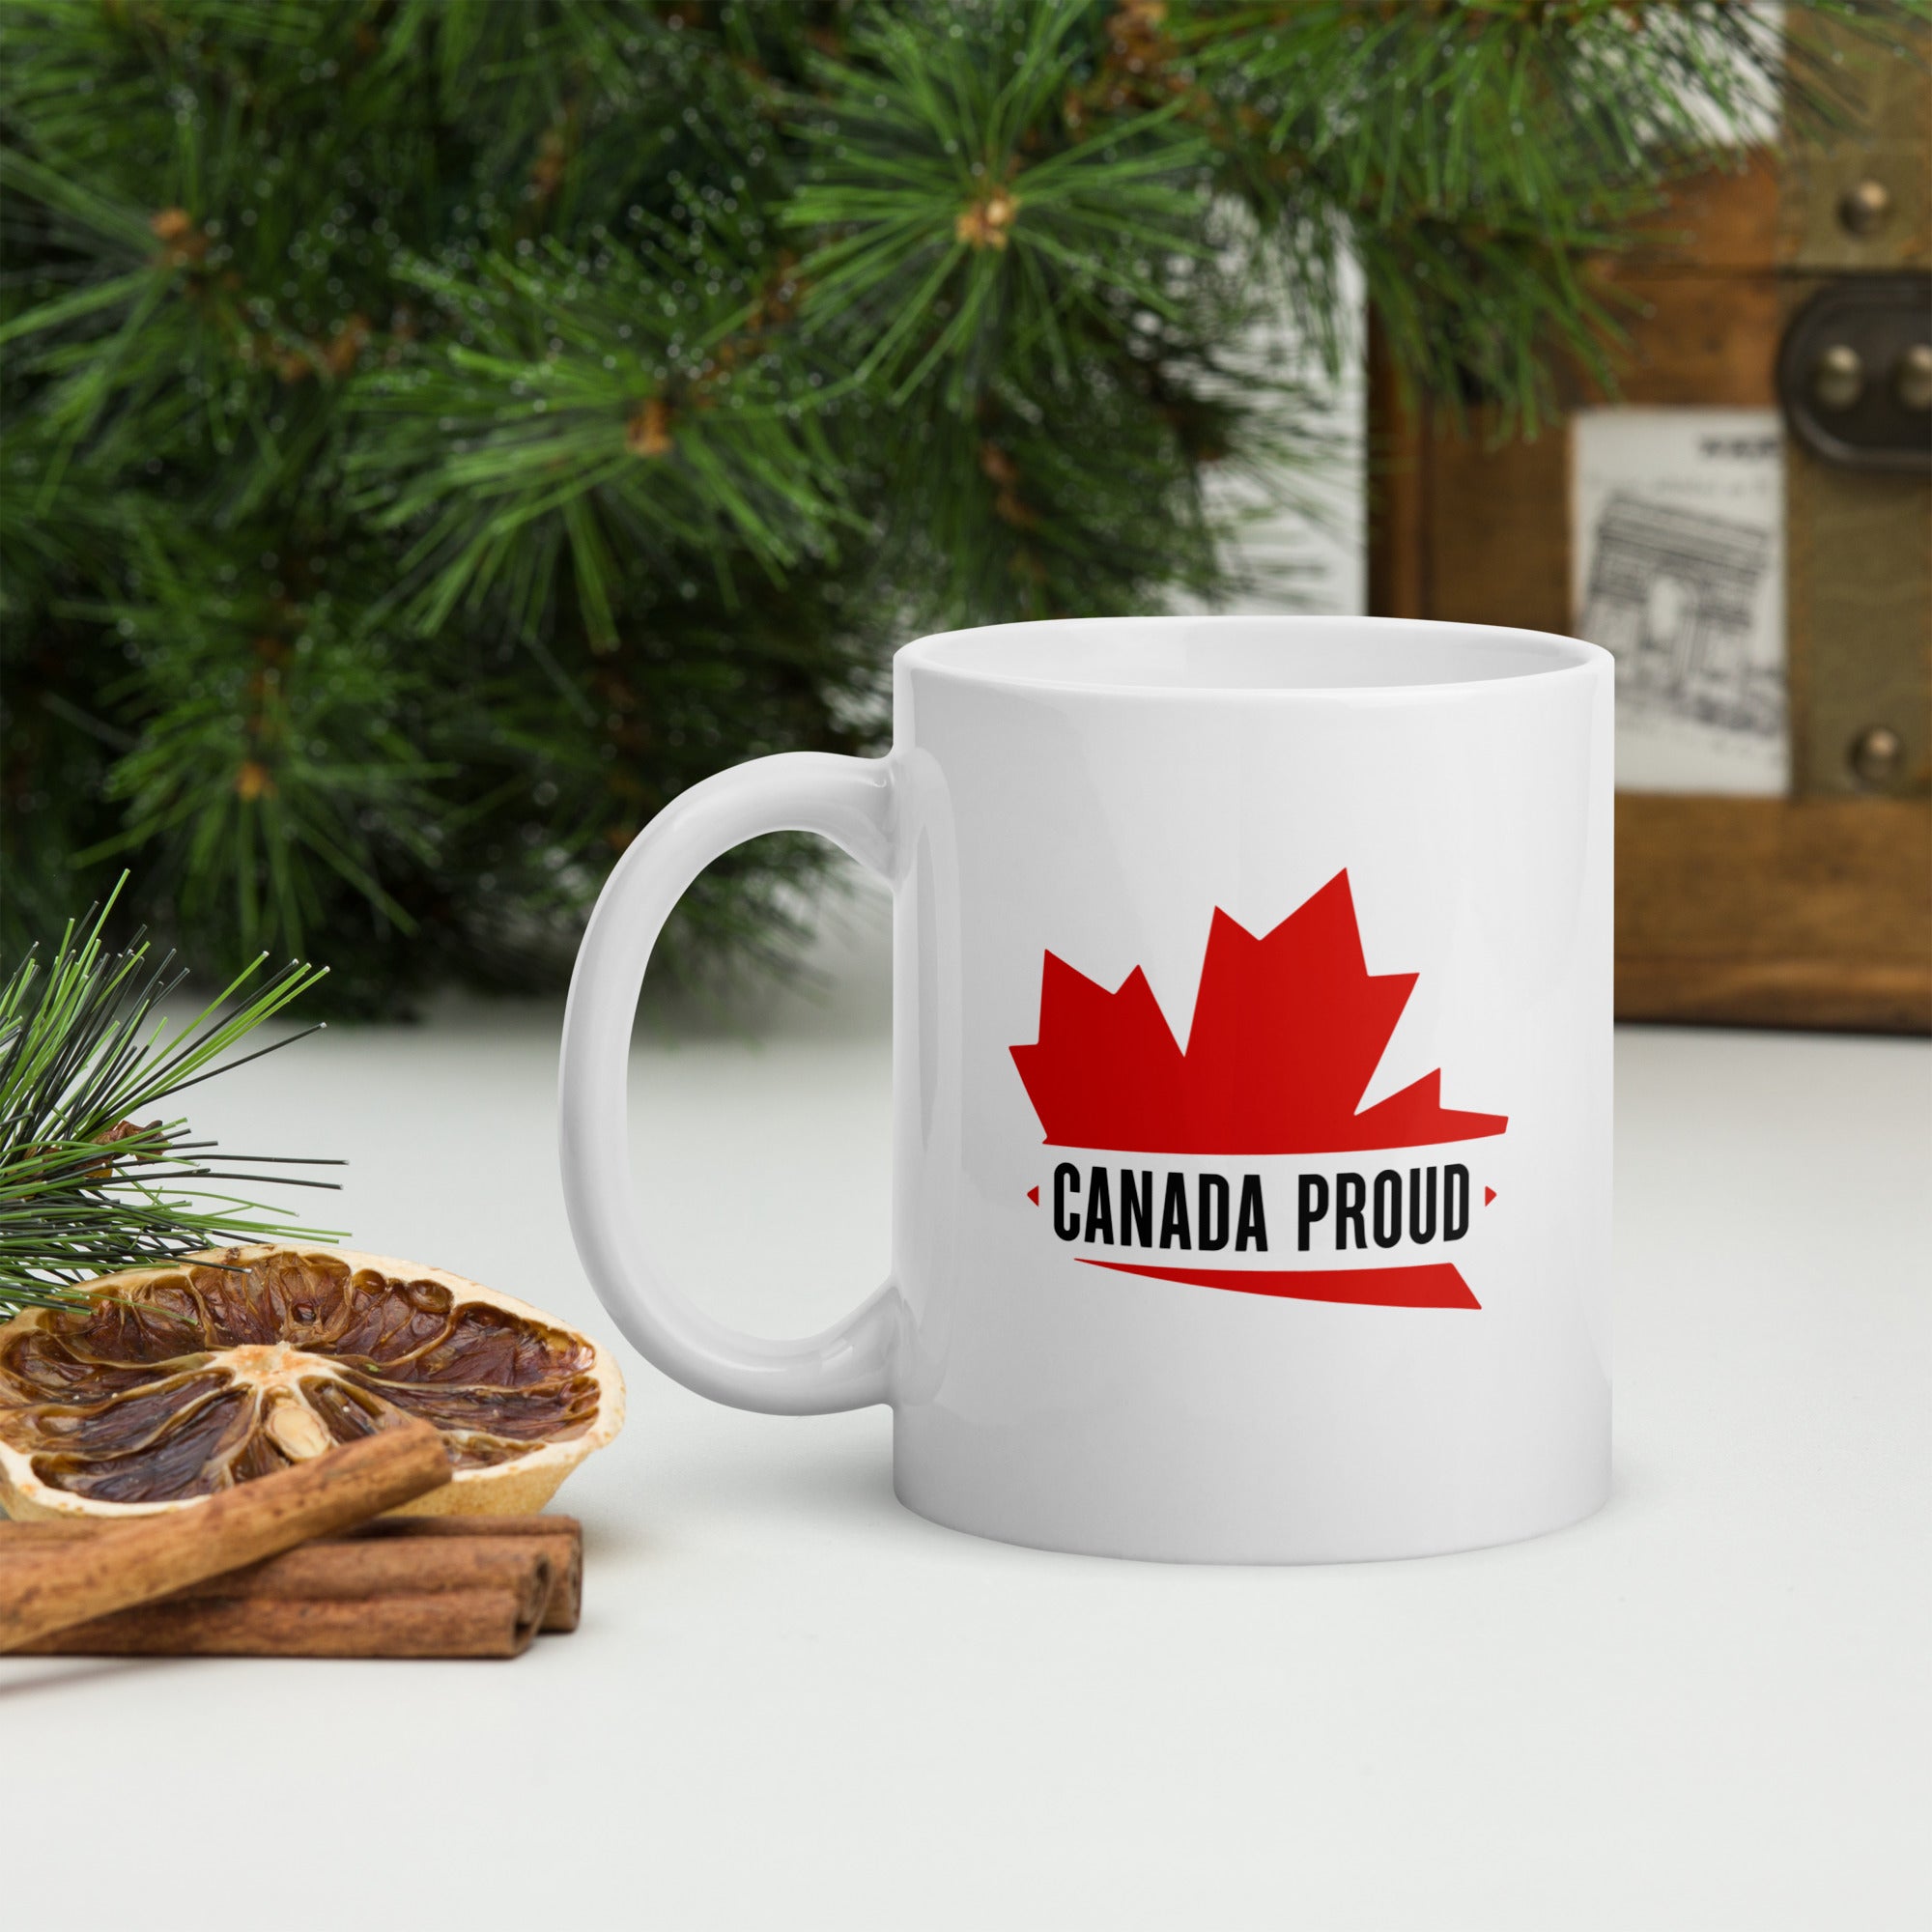 Canada Proud White Glossy Mug